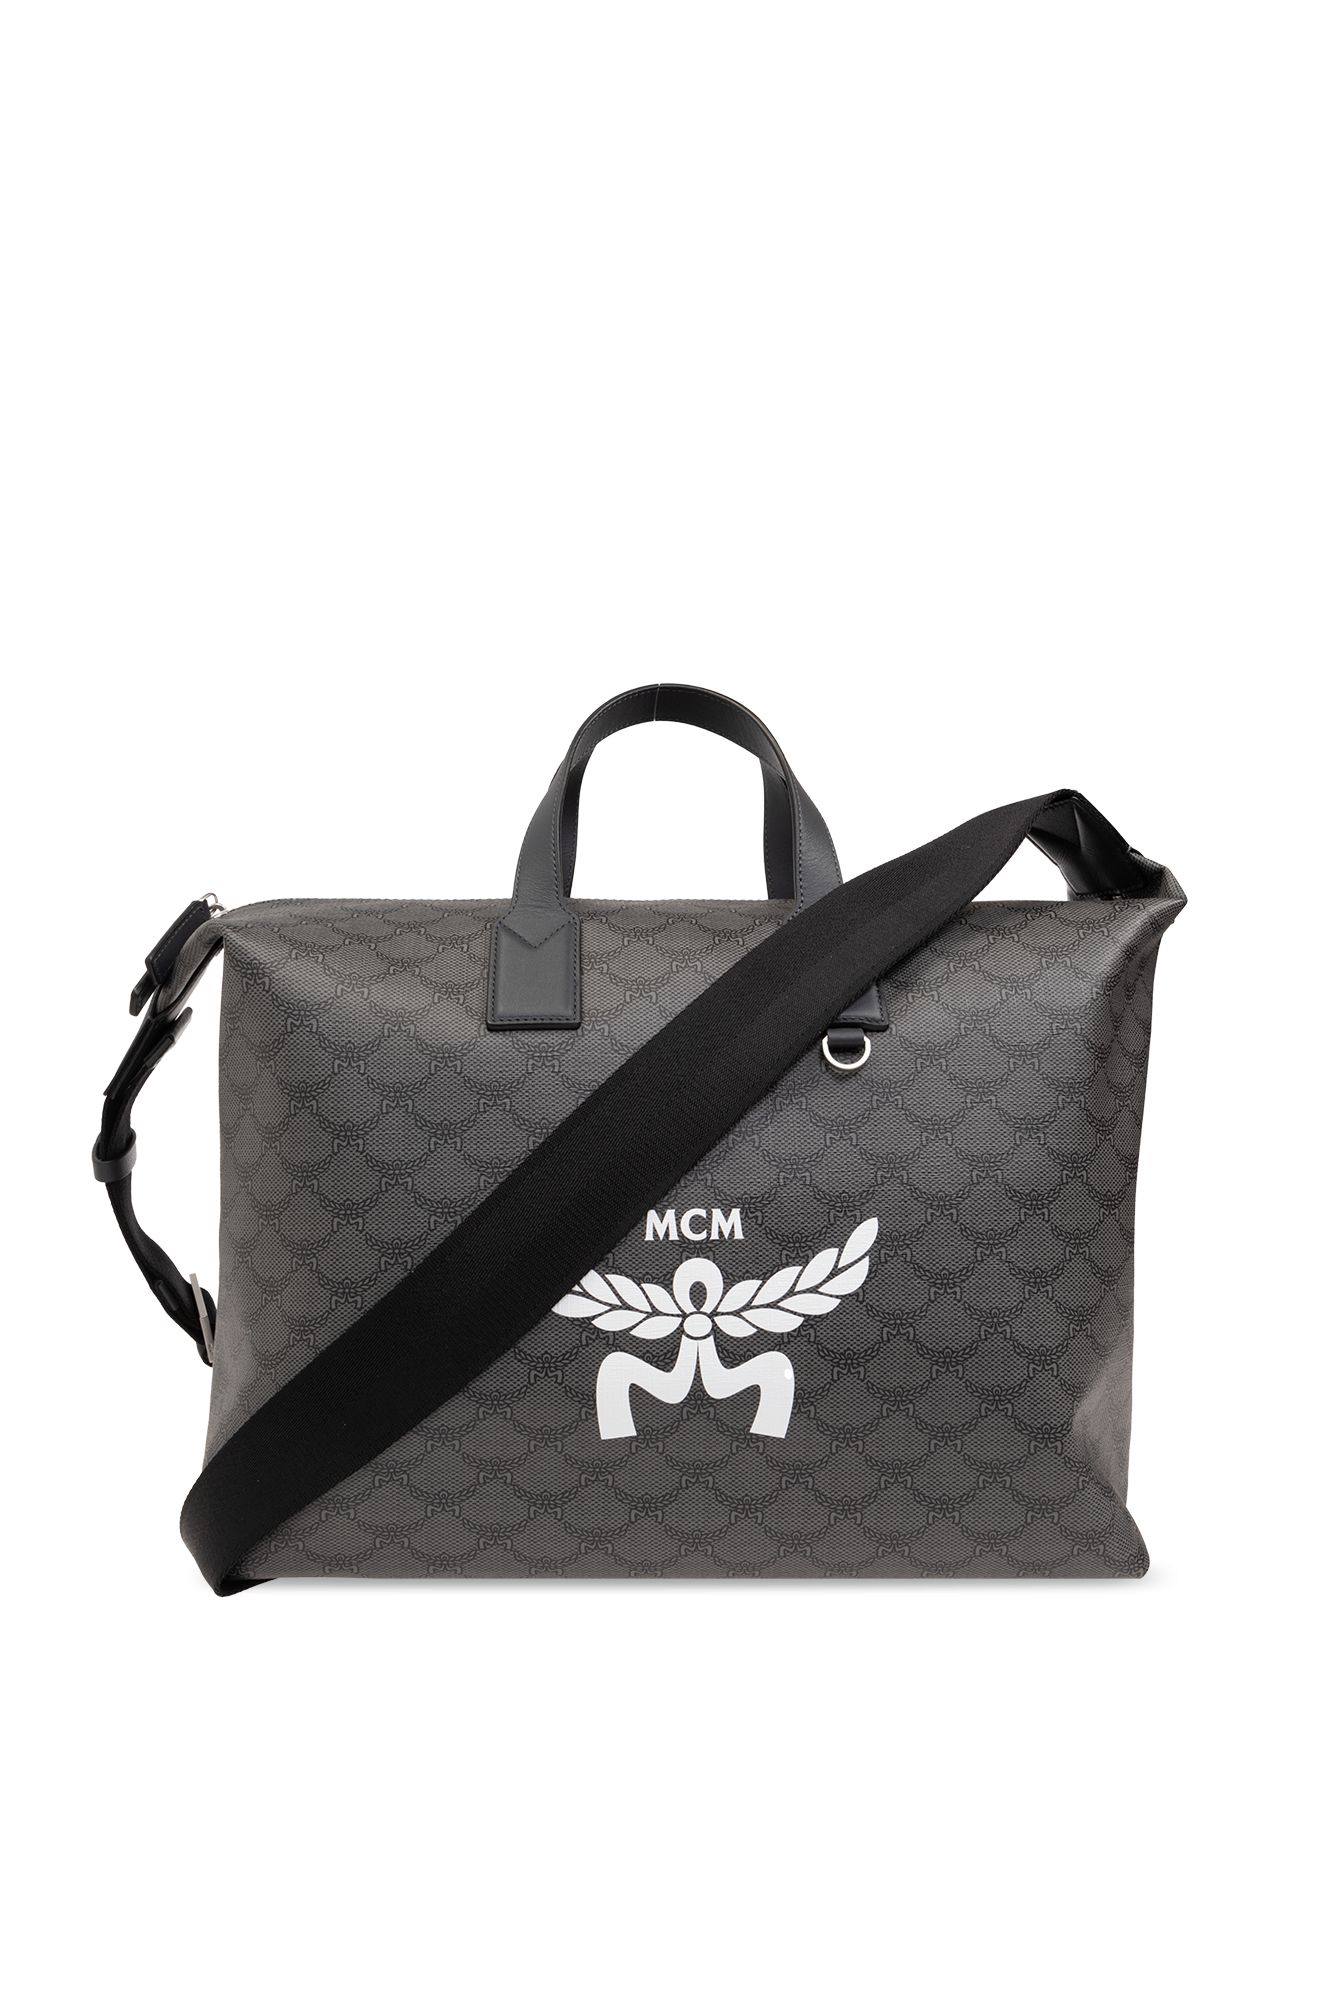 MCM Travel bag